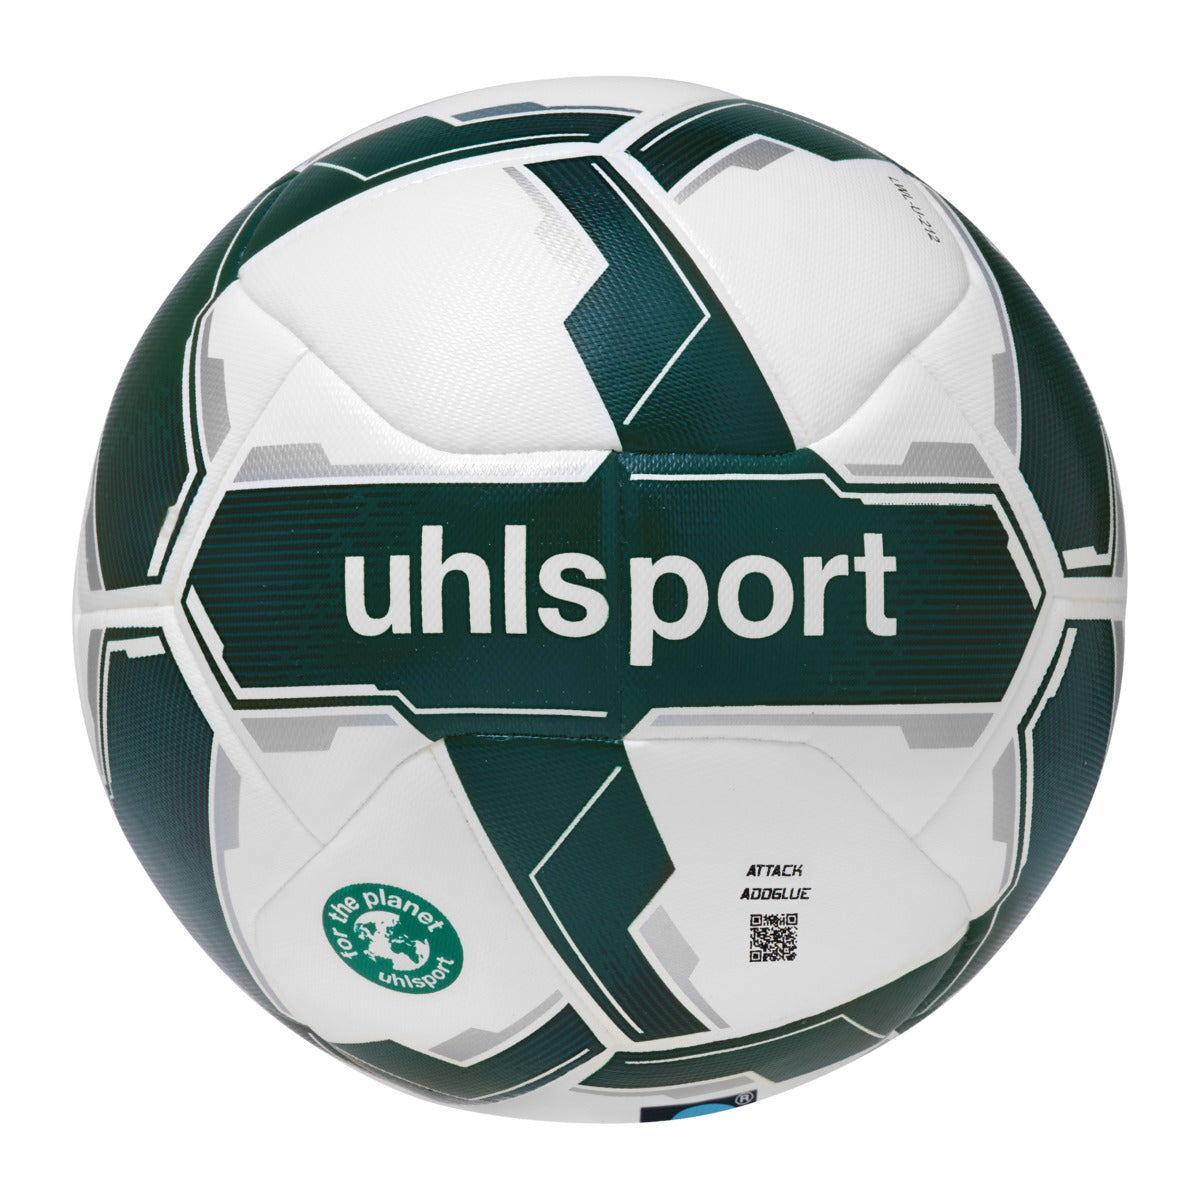 Uhlsport Attack Addglue FTP - White